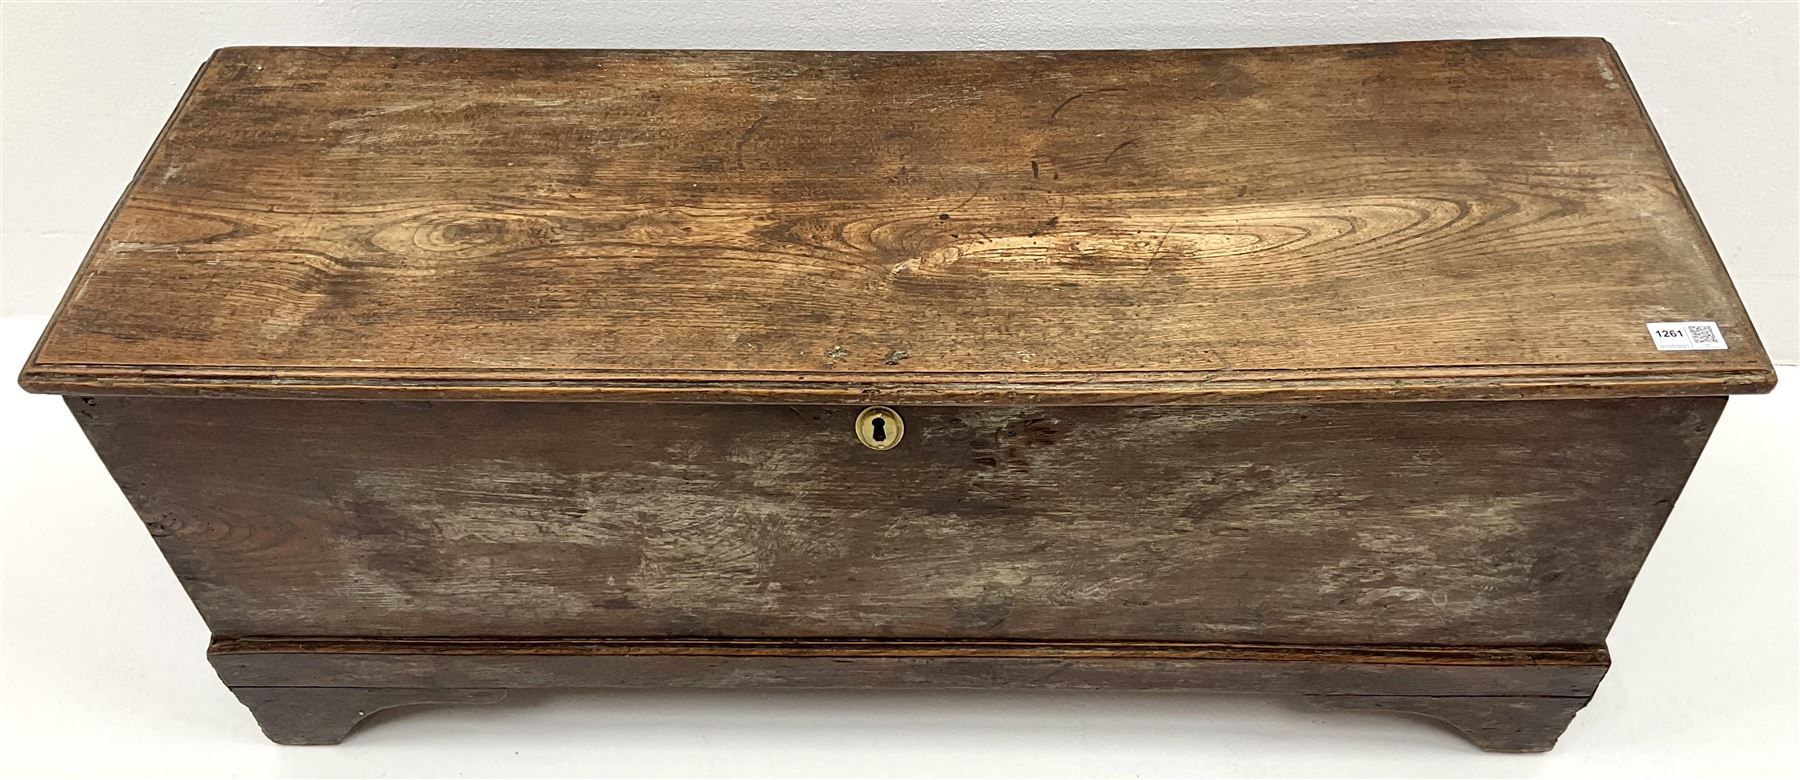 18th century elm chest - Image 2 of 3